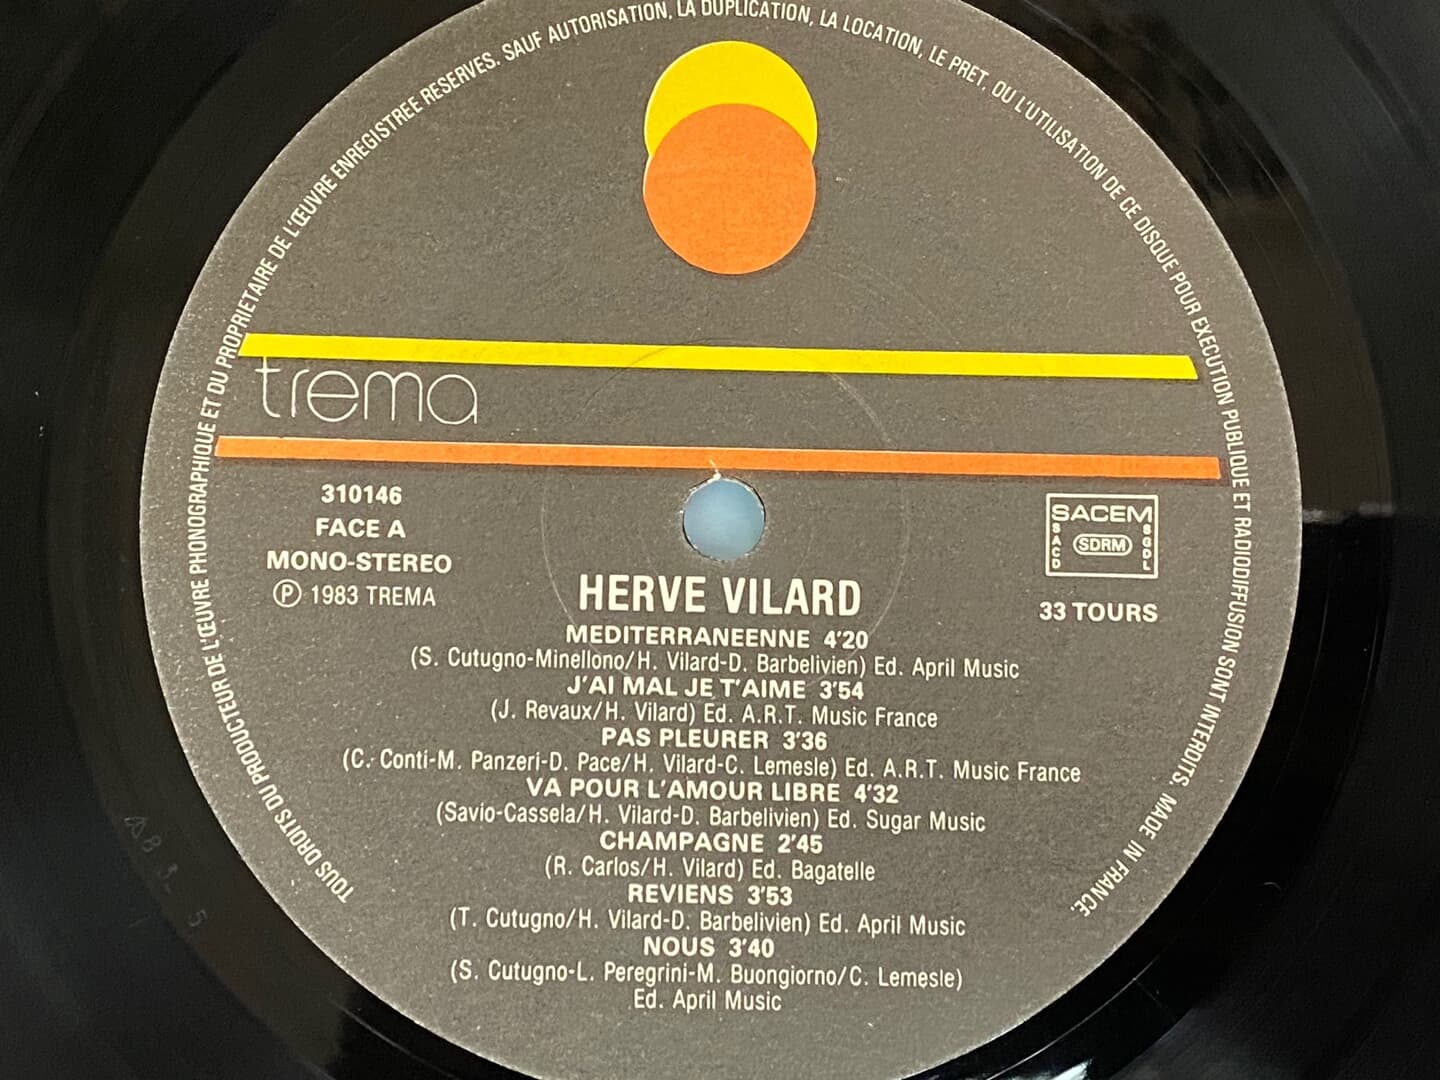 [LP] 허브 빌라드 - Herve Vilard - 14 Chansons D'or LP [프랑스반]